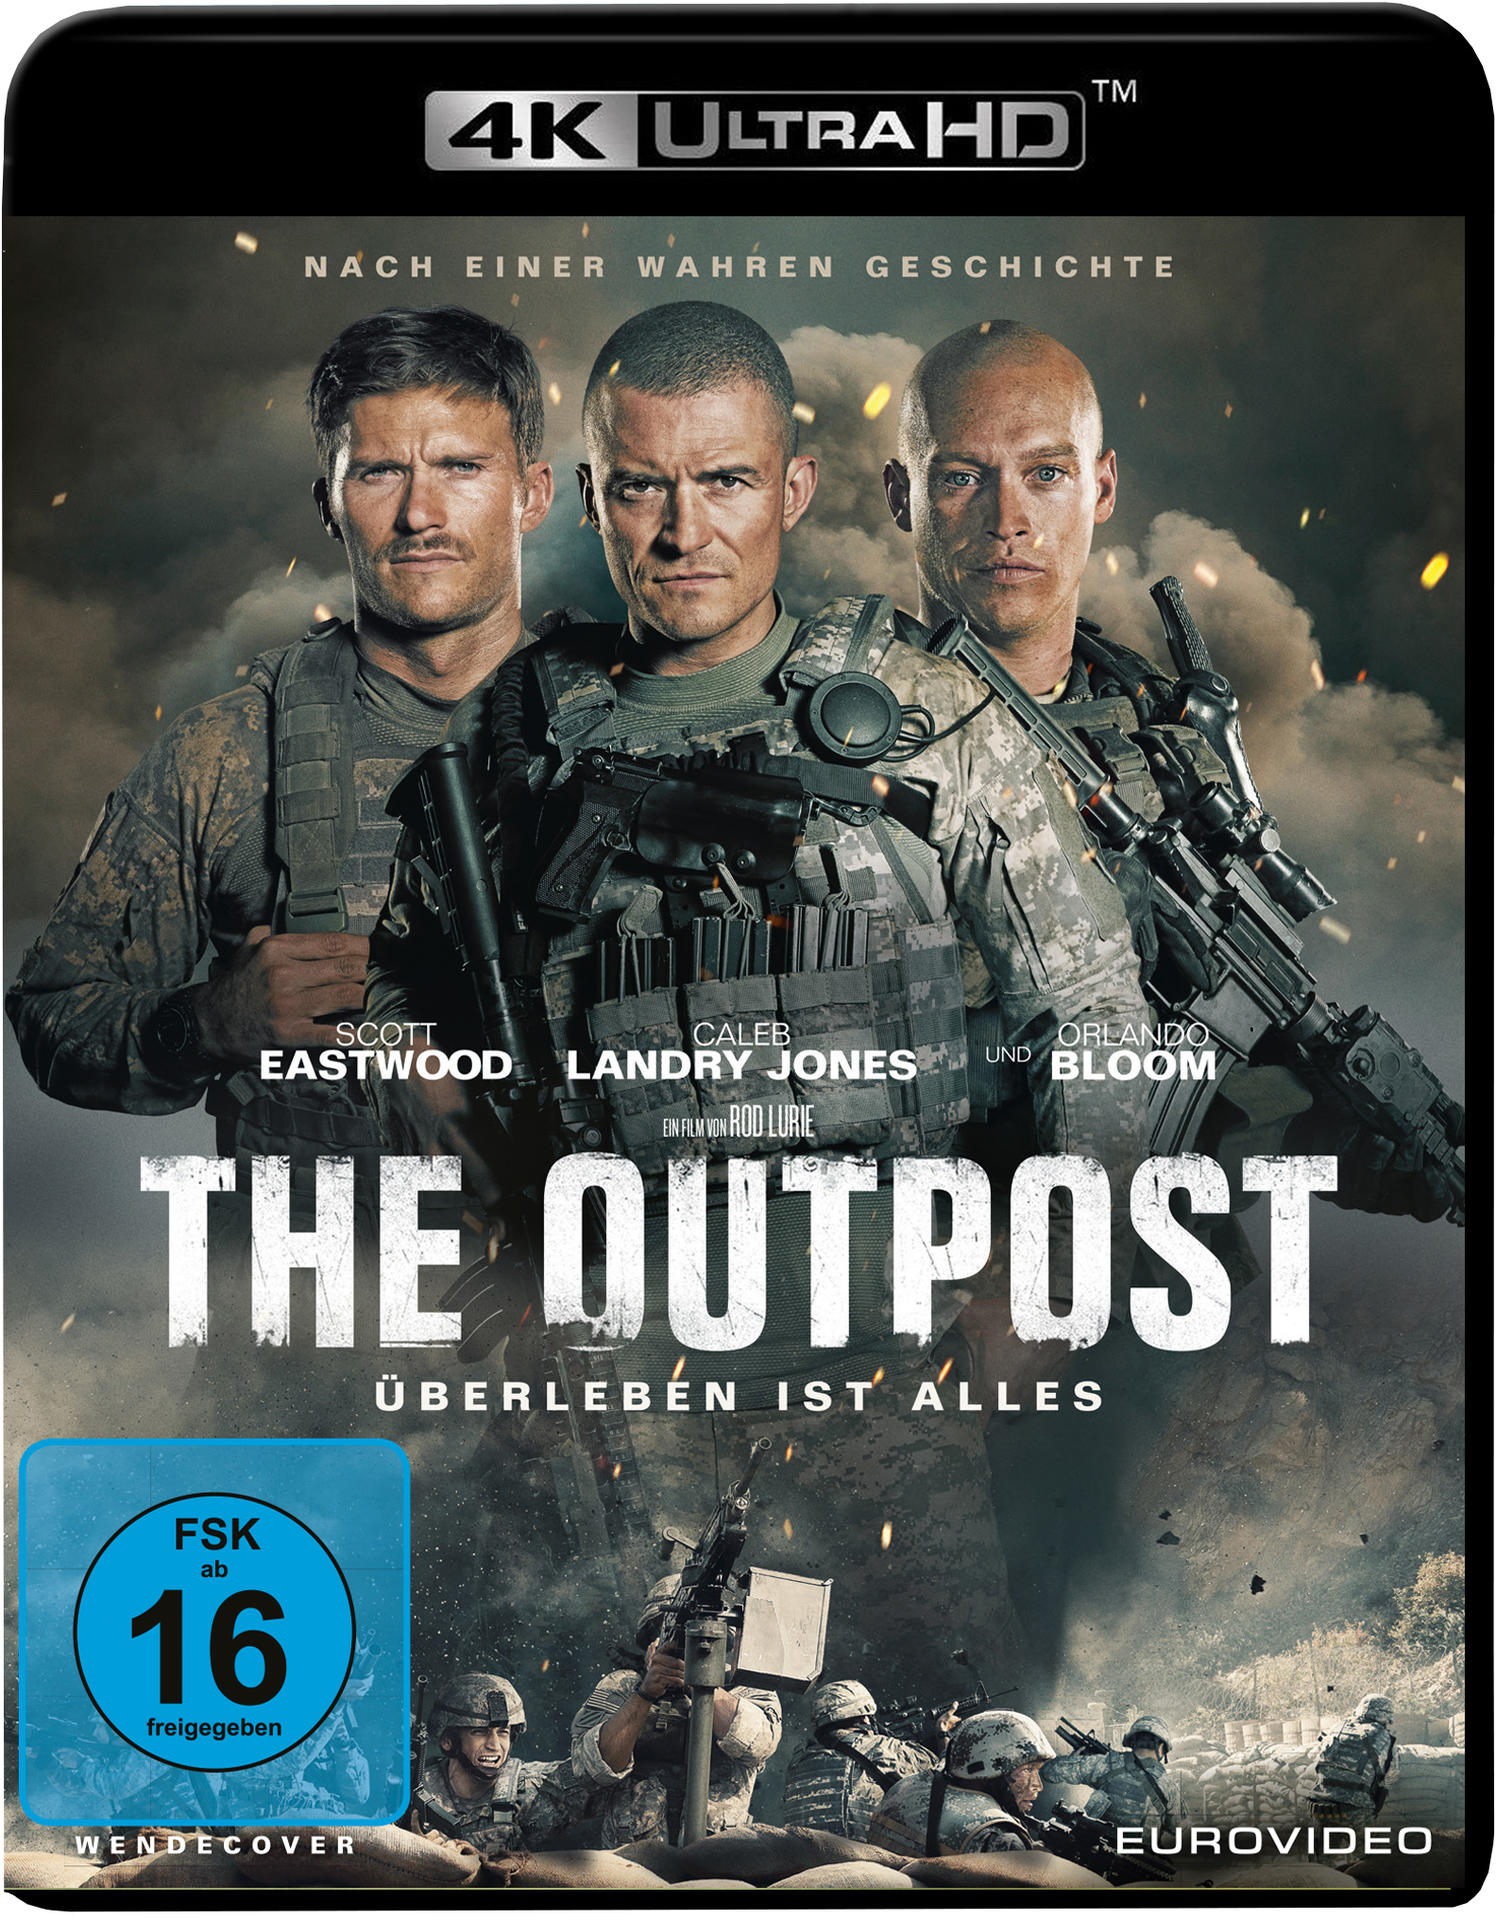 The Outpost - Überleben alles Ultra ist 4K HD Blu-ray